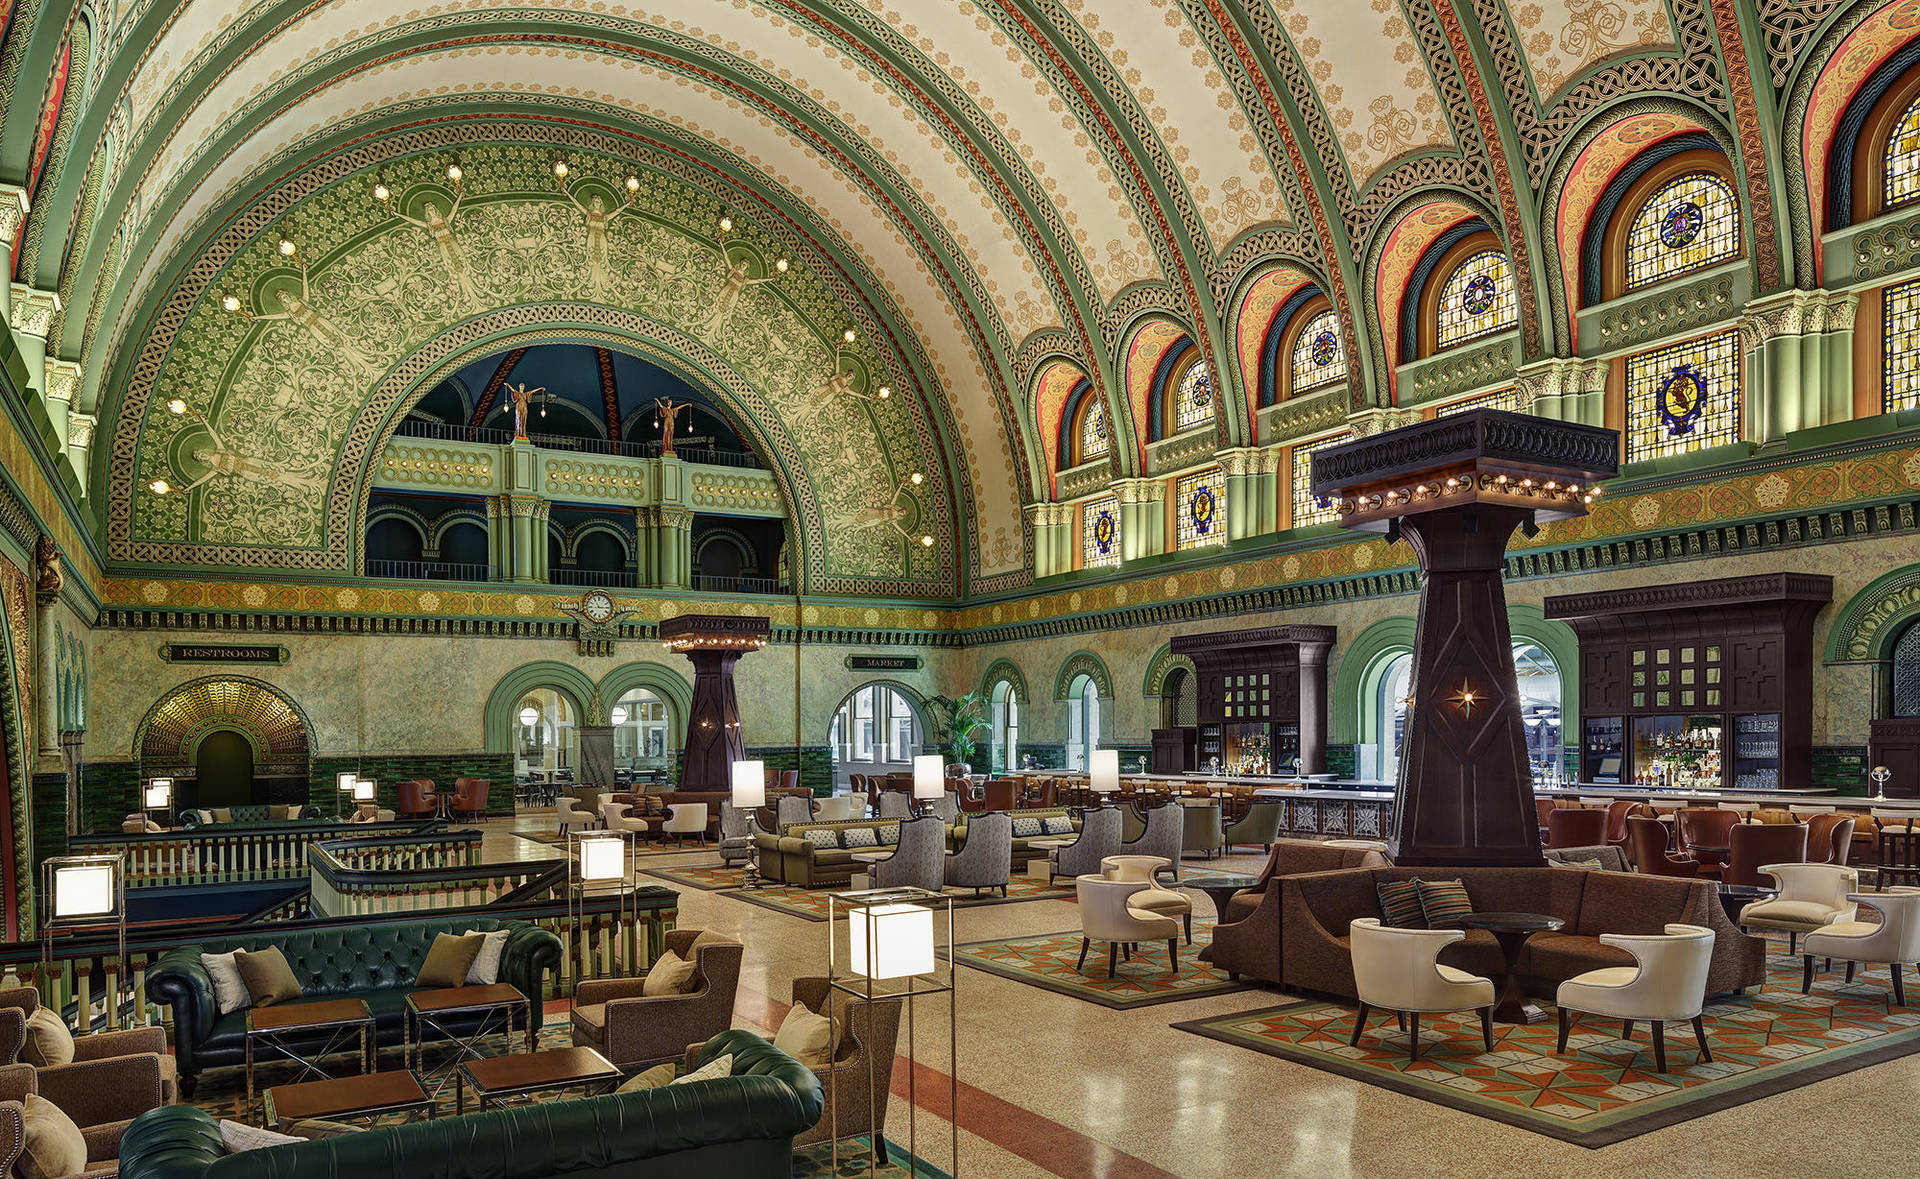 Interior Design Of Union Station Picture